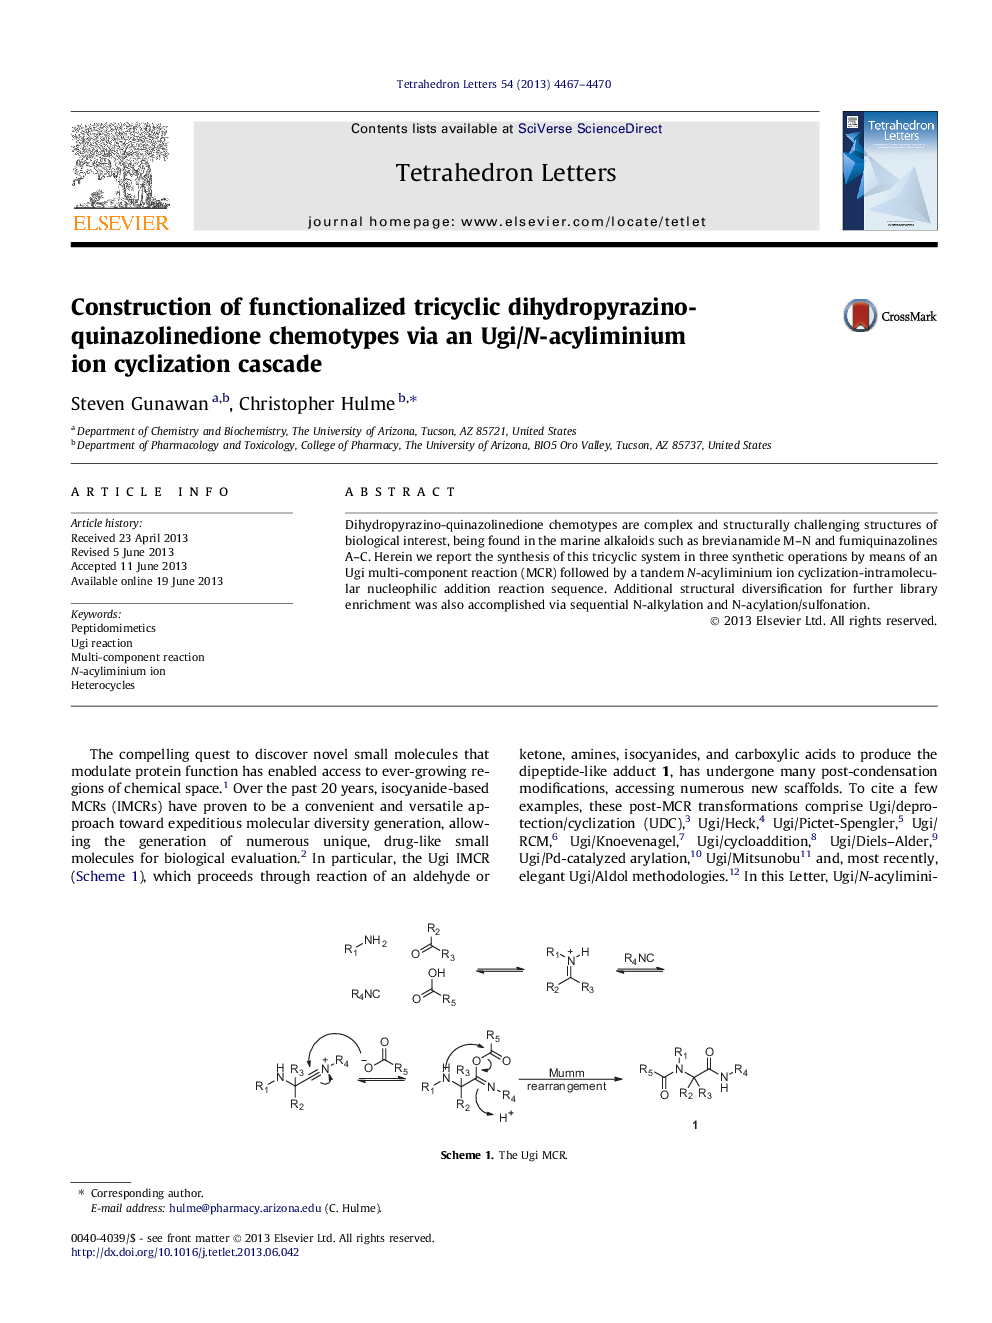 Construction of functionalized tricyclic dihydropyrazino-quinazolinedione chemotypes via an Ugi/N-acyliminium ion cyclization cascade